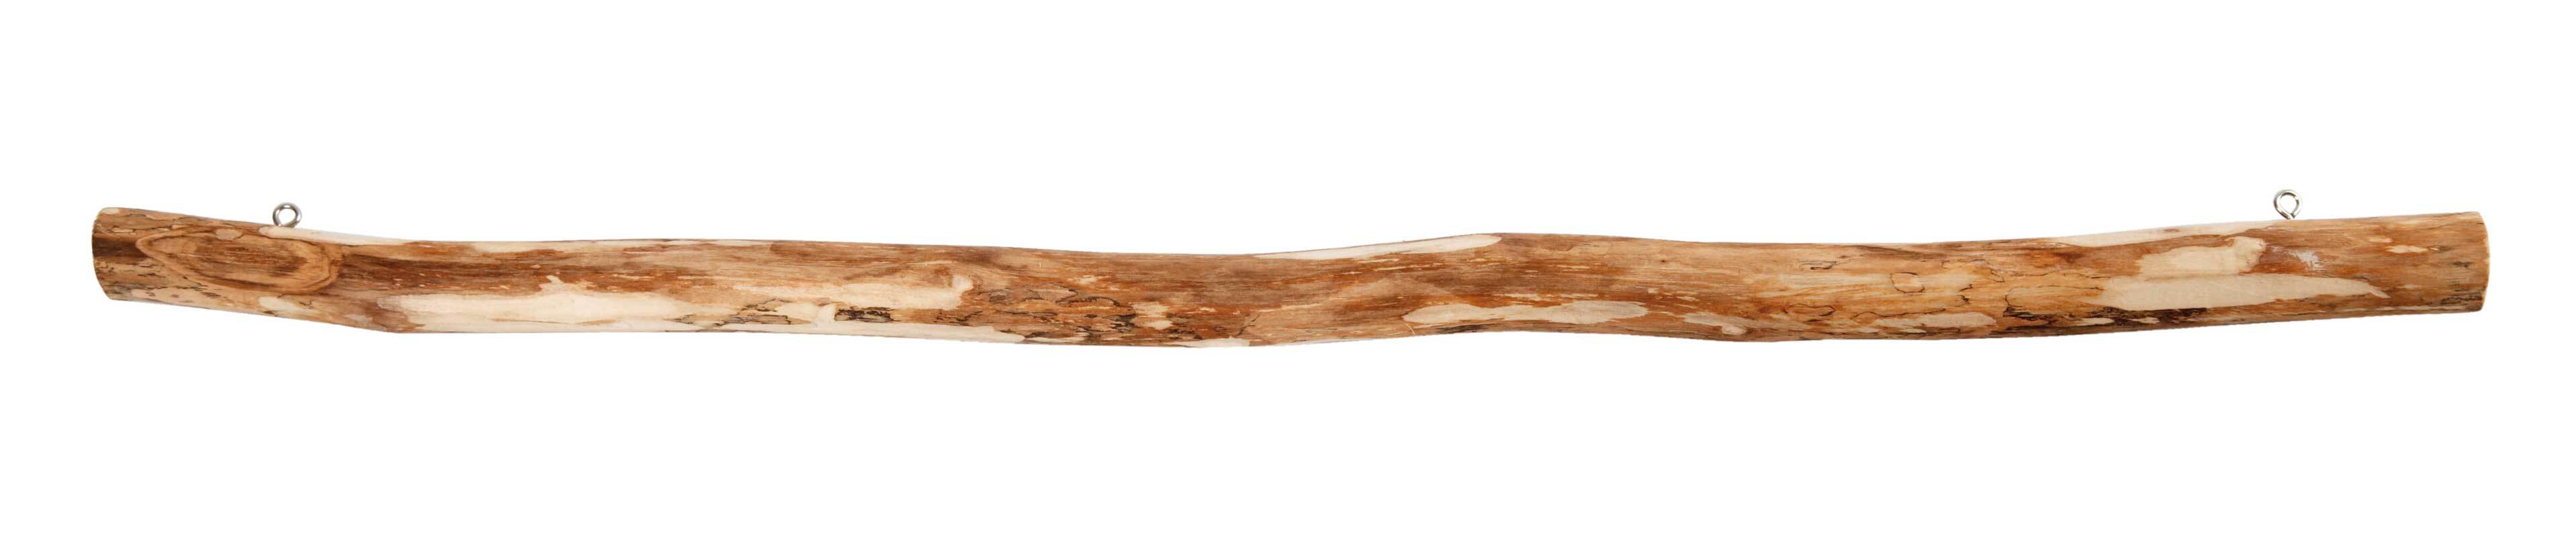 Houten stok, 40 cm